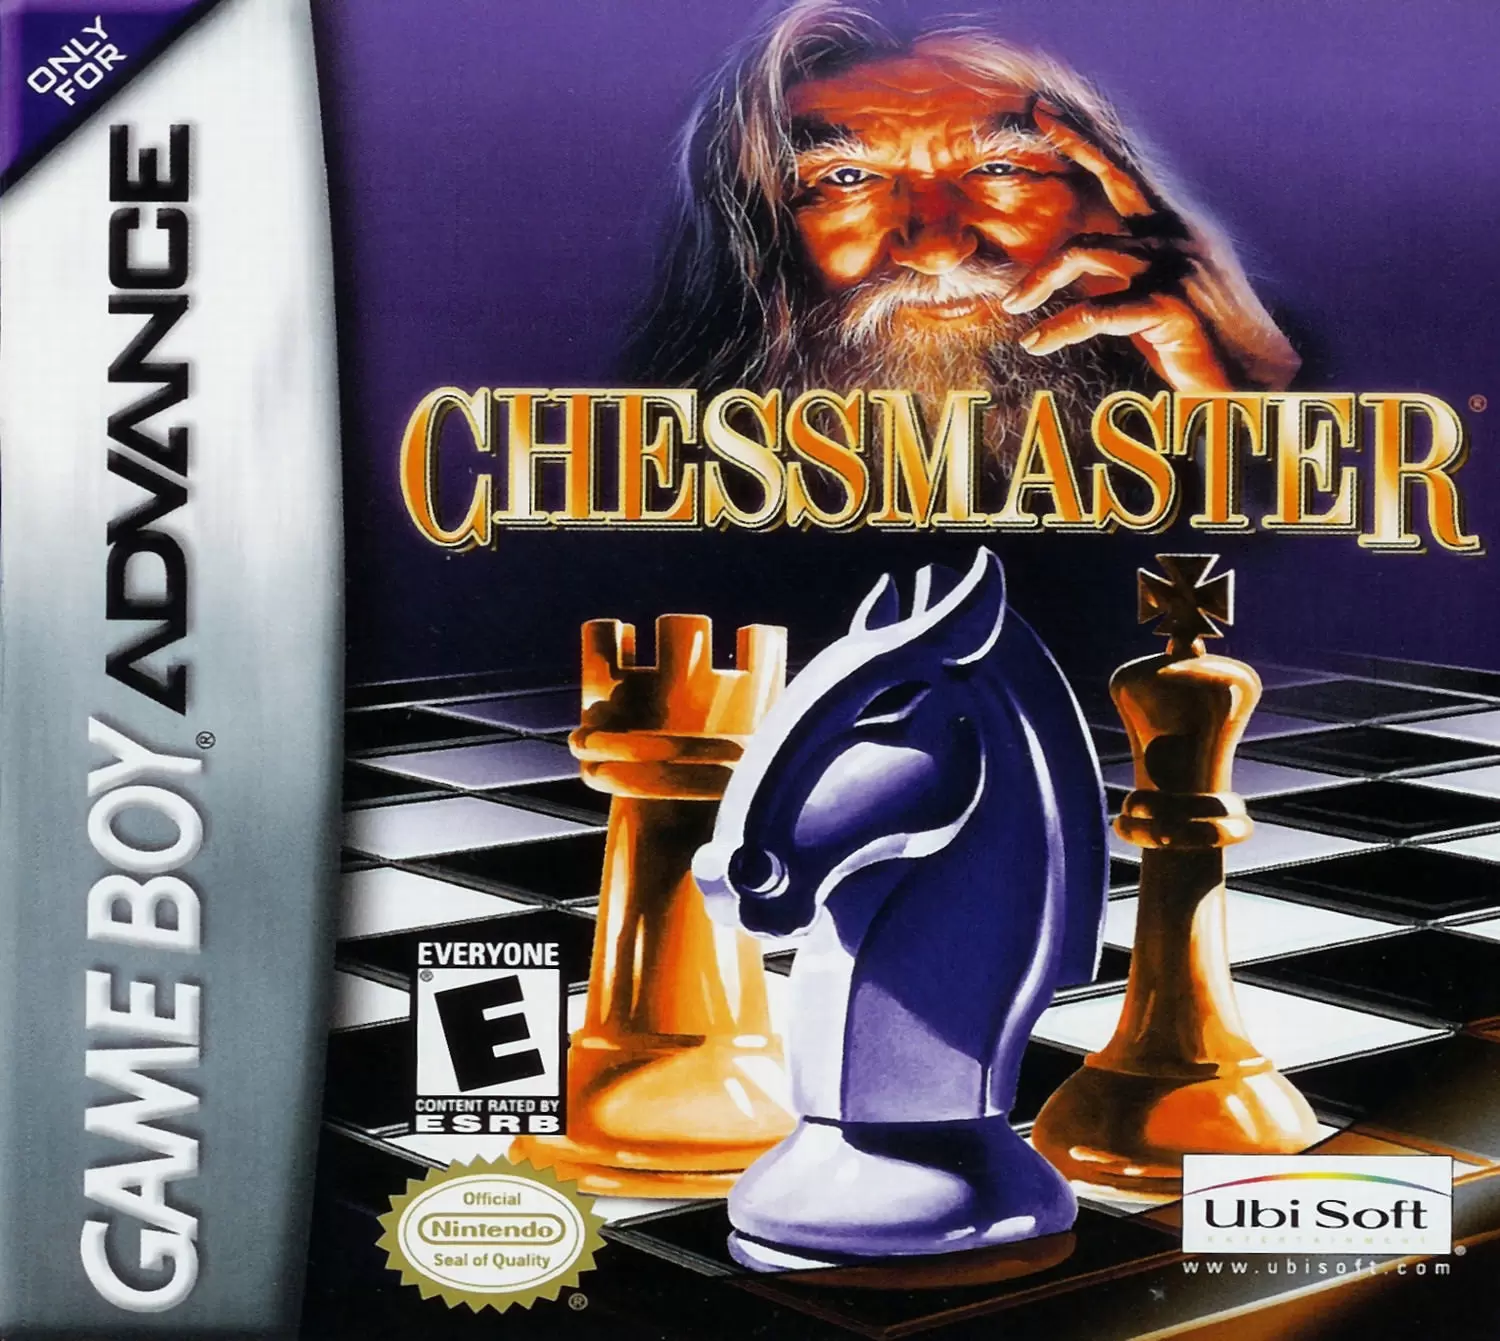 Game Boy Advance Games - Chessmaster